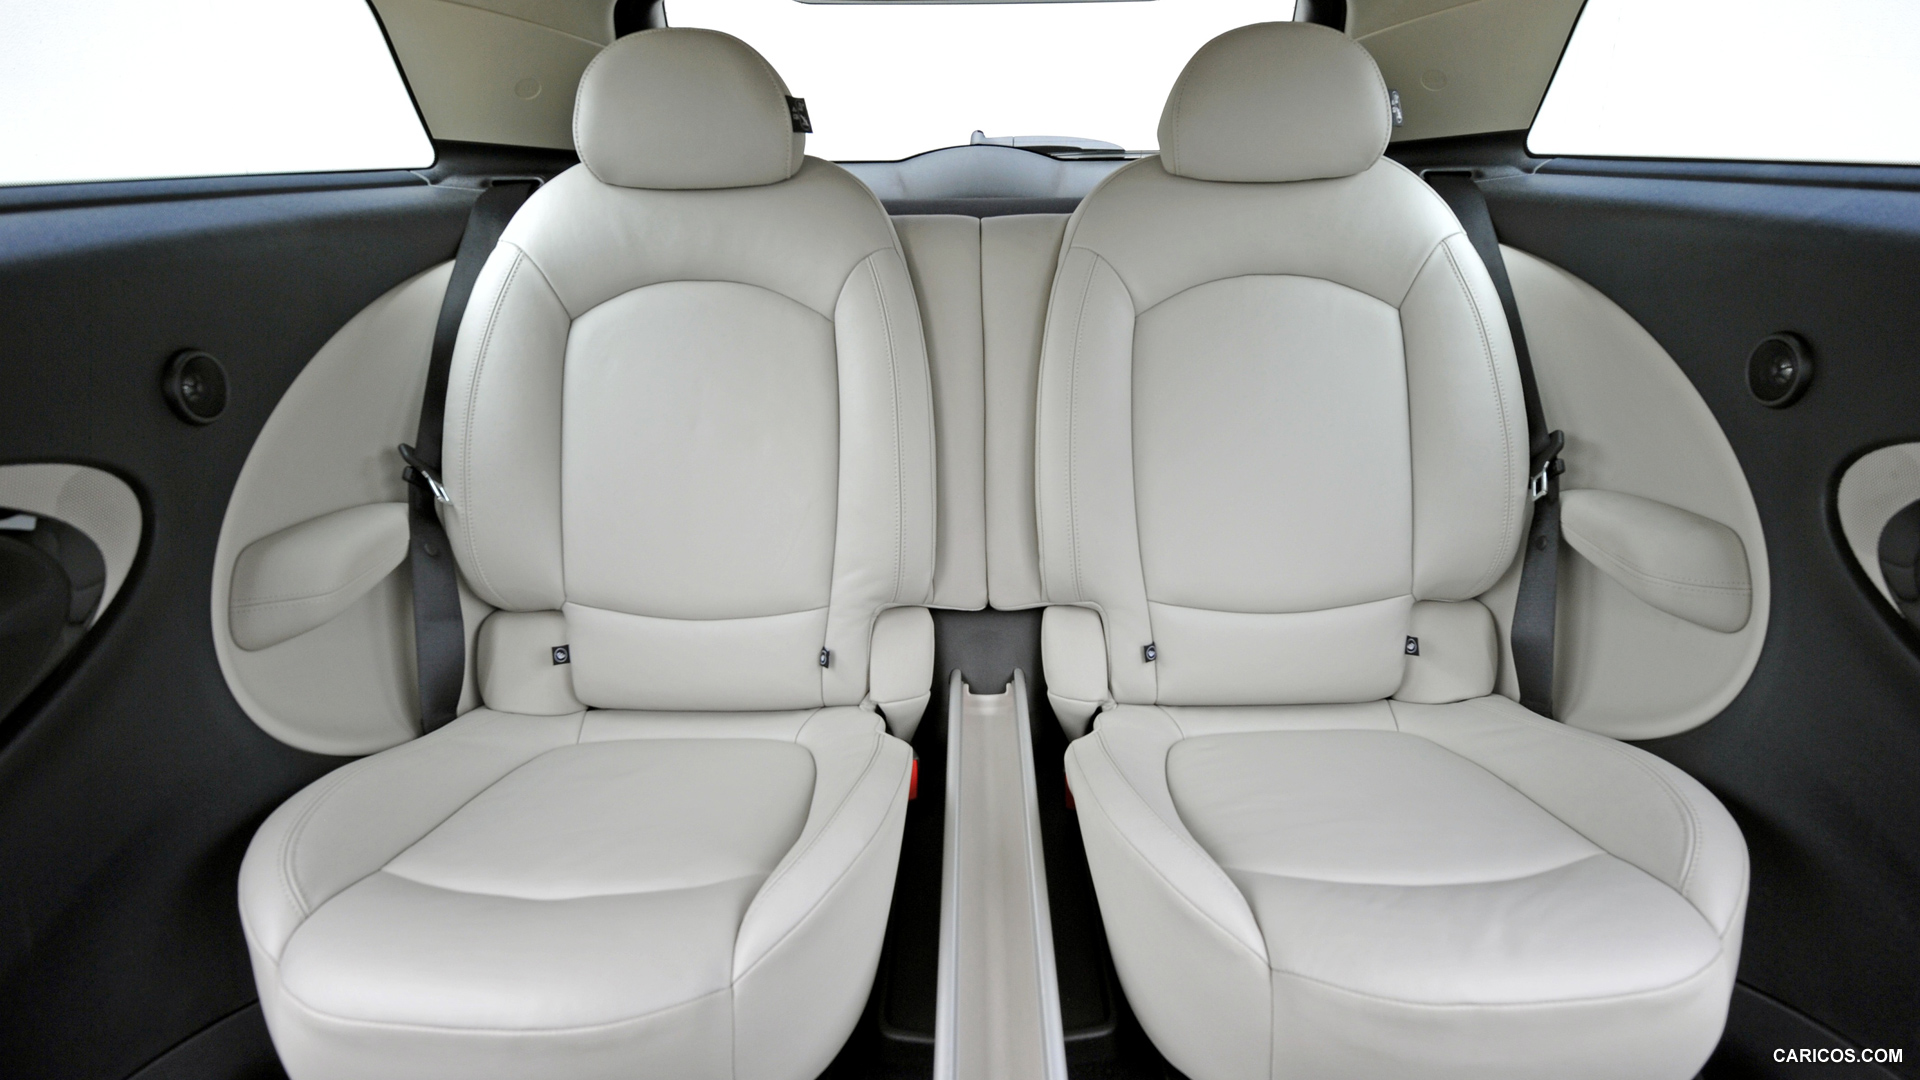 2013 MINI Cooper S Paceman  - Interior Rear Seats, #388 of 438